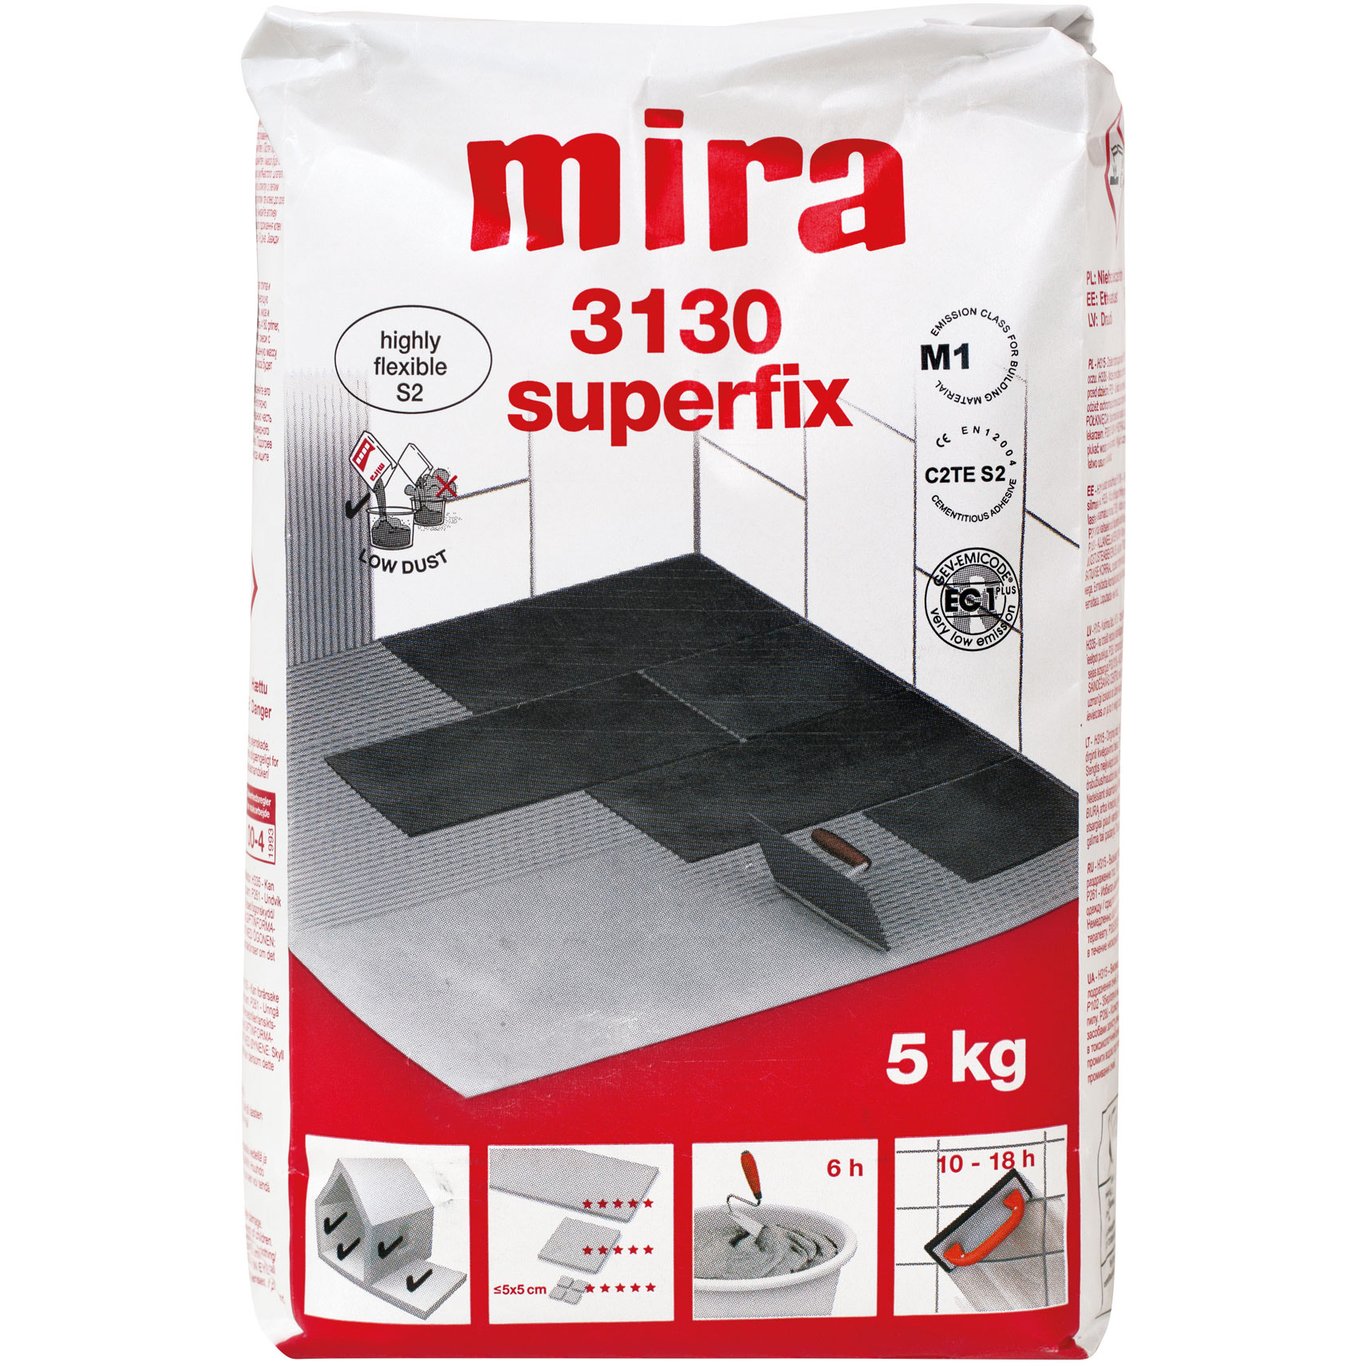 MIRA 3130 SUPERFIX 5KG